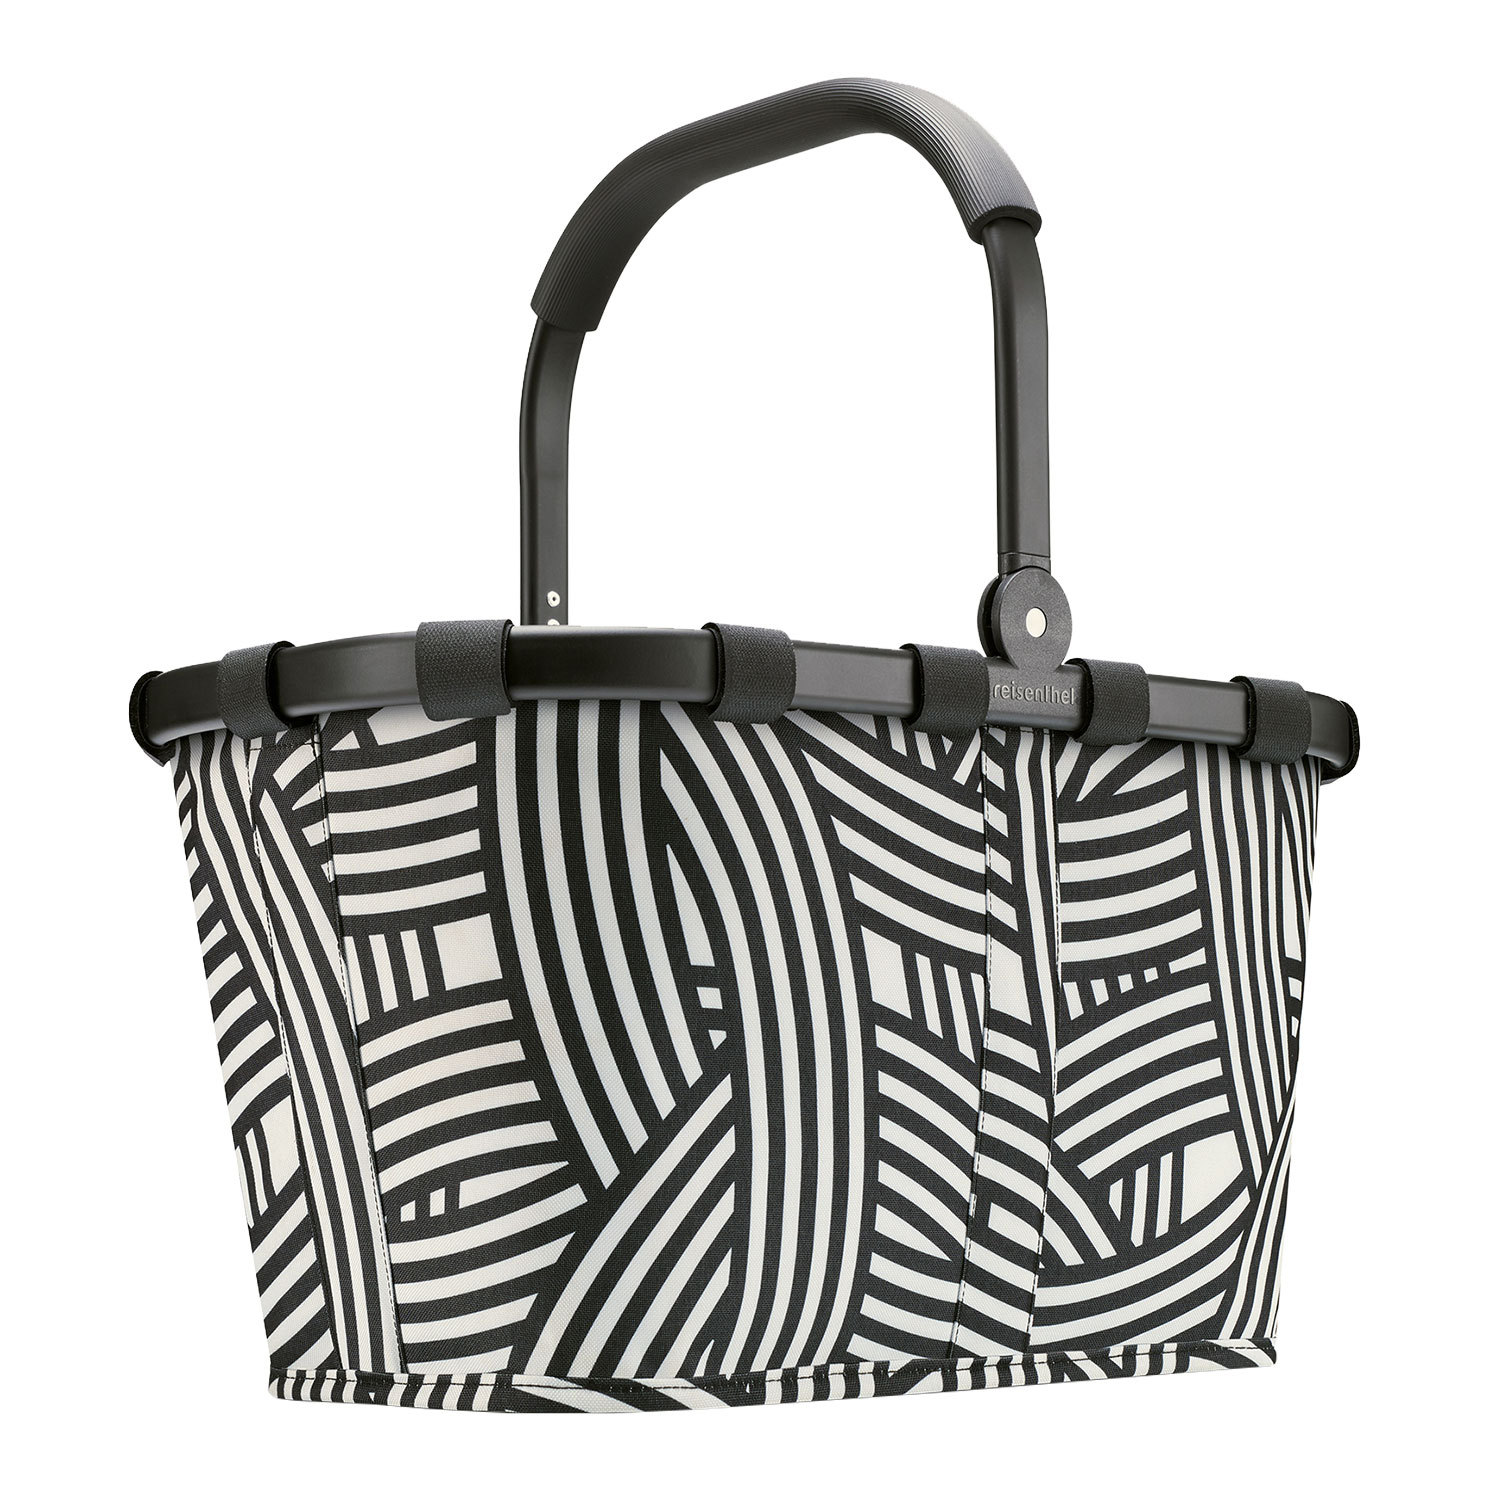 Einkaufskorb carrybag frame zebra 22 Liter reisenthel